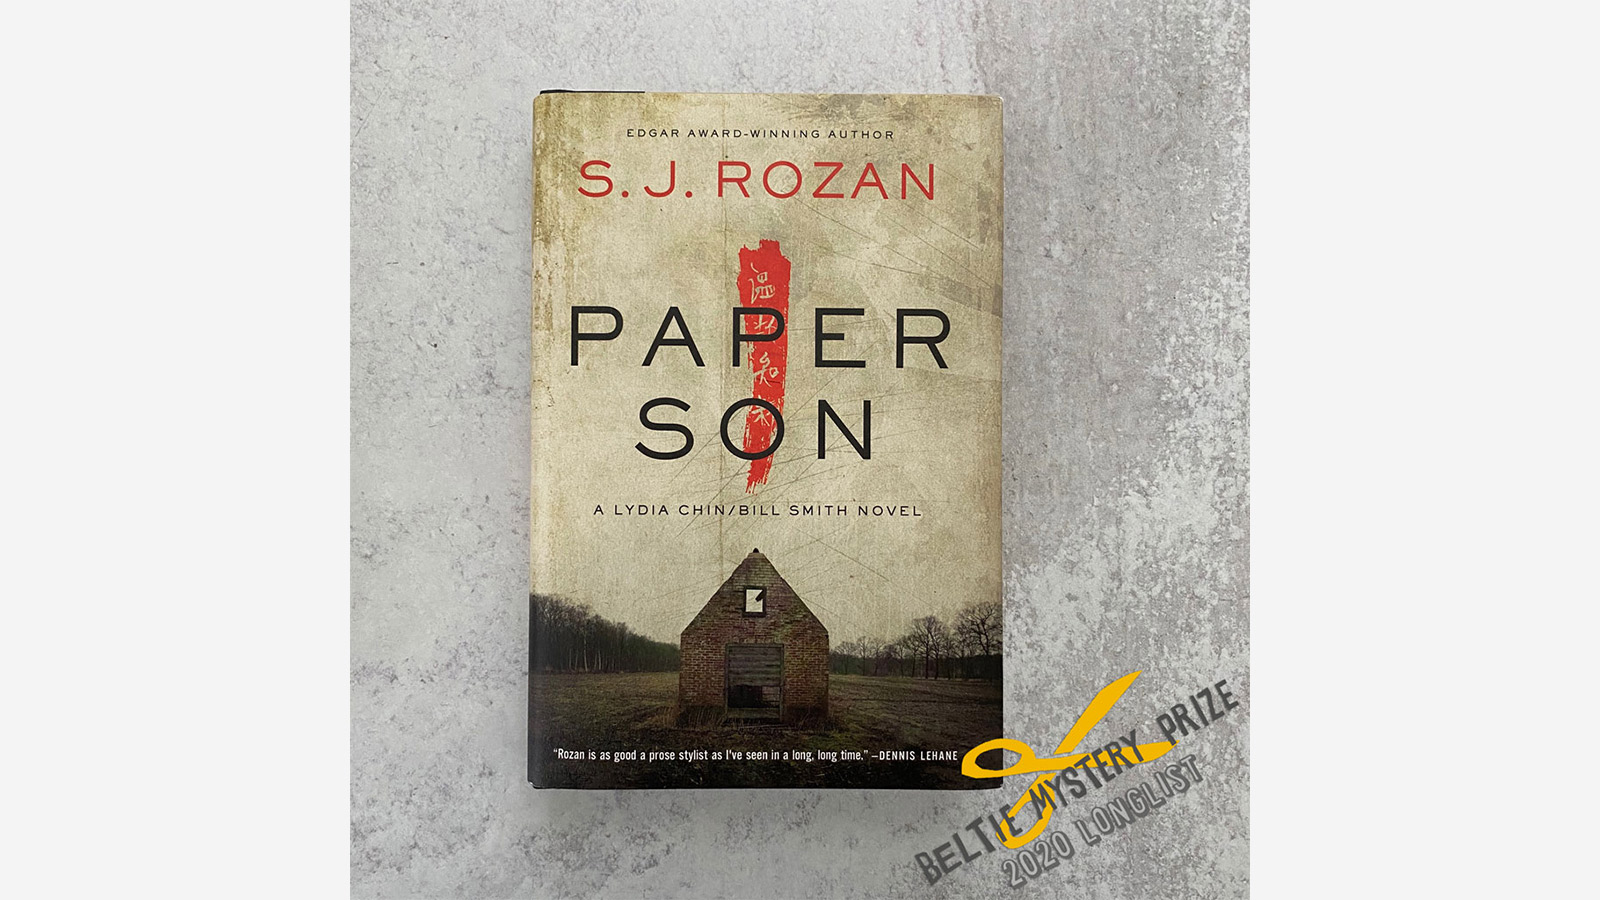 Paper Son by S. J. Rozan